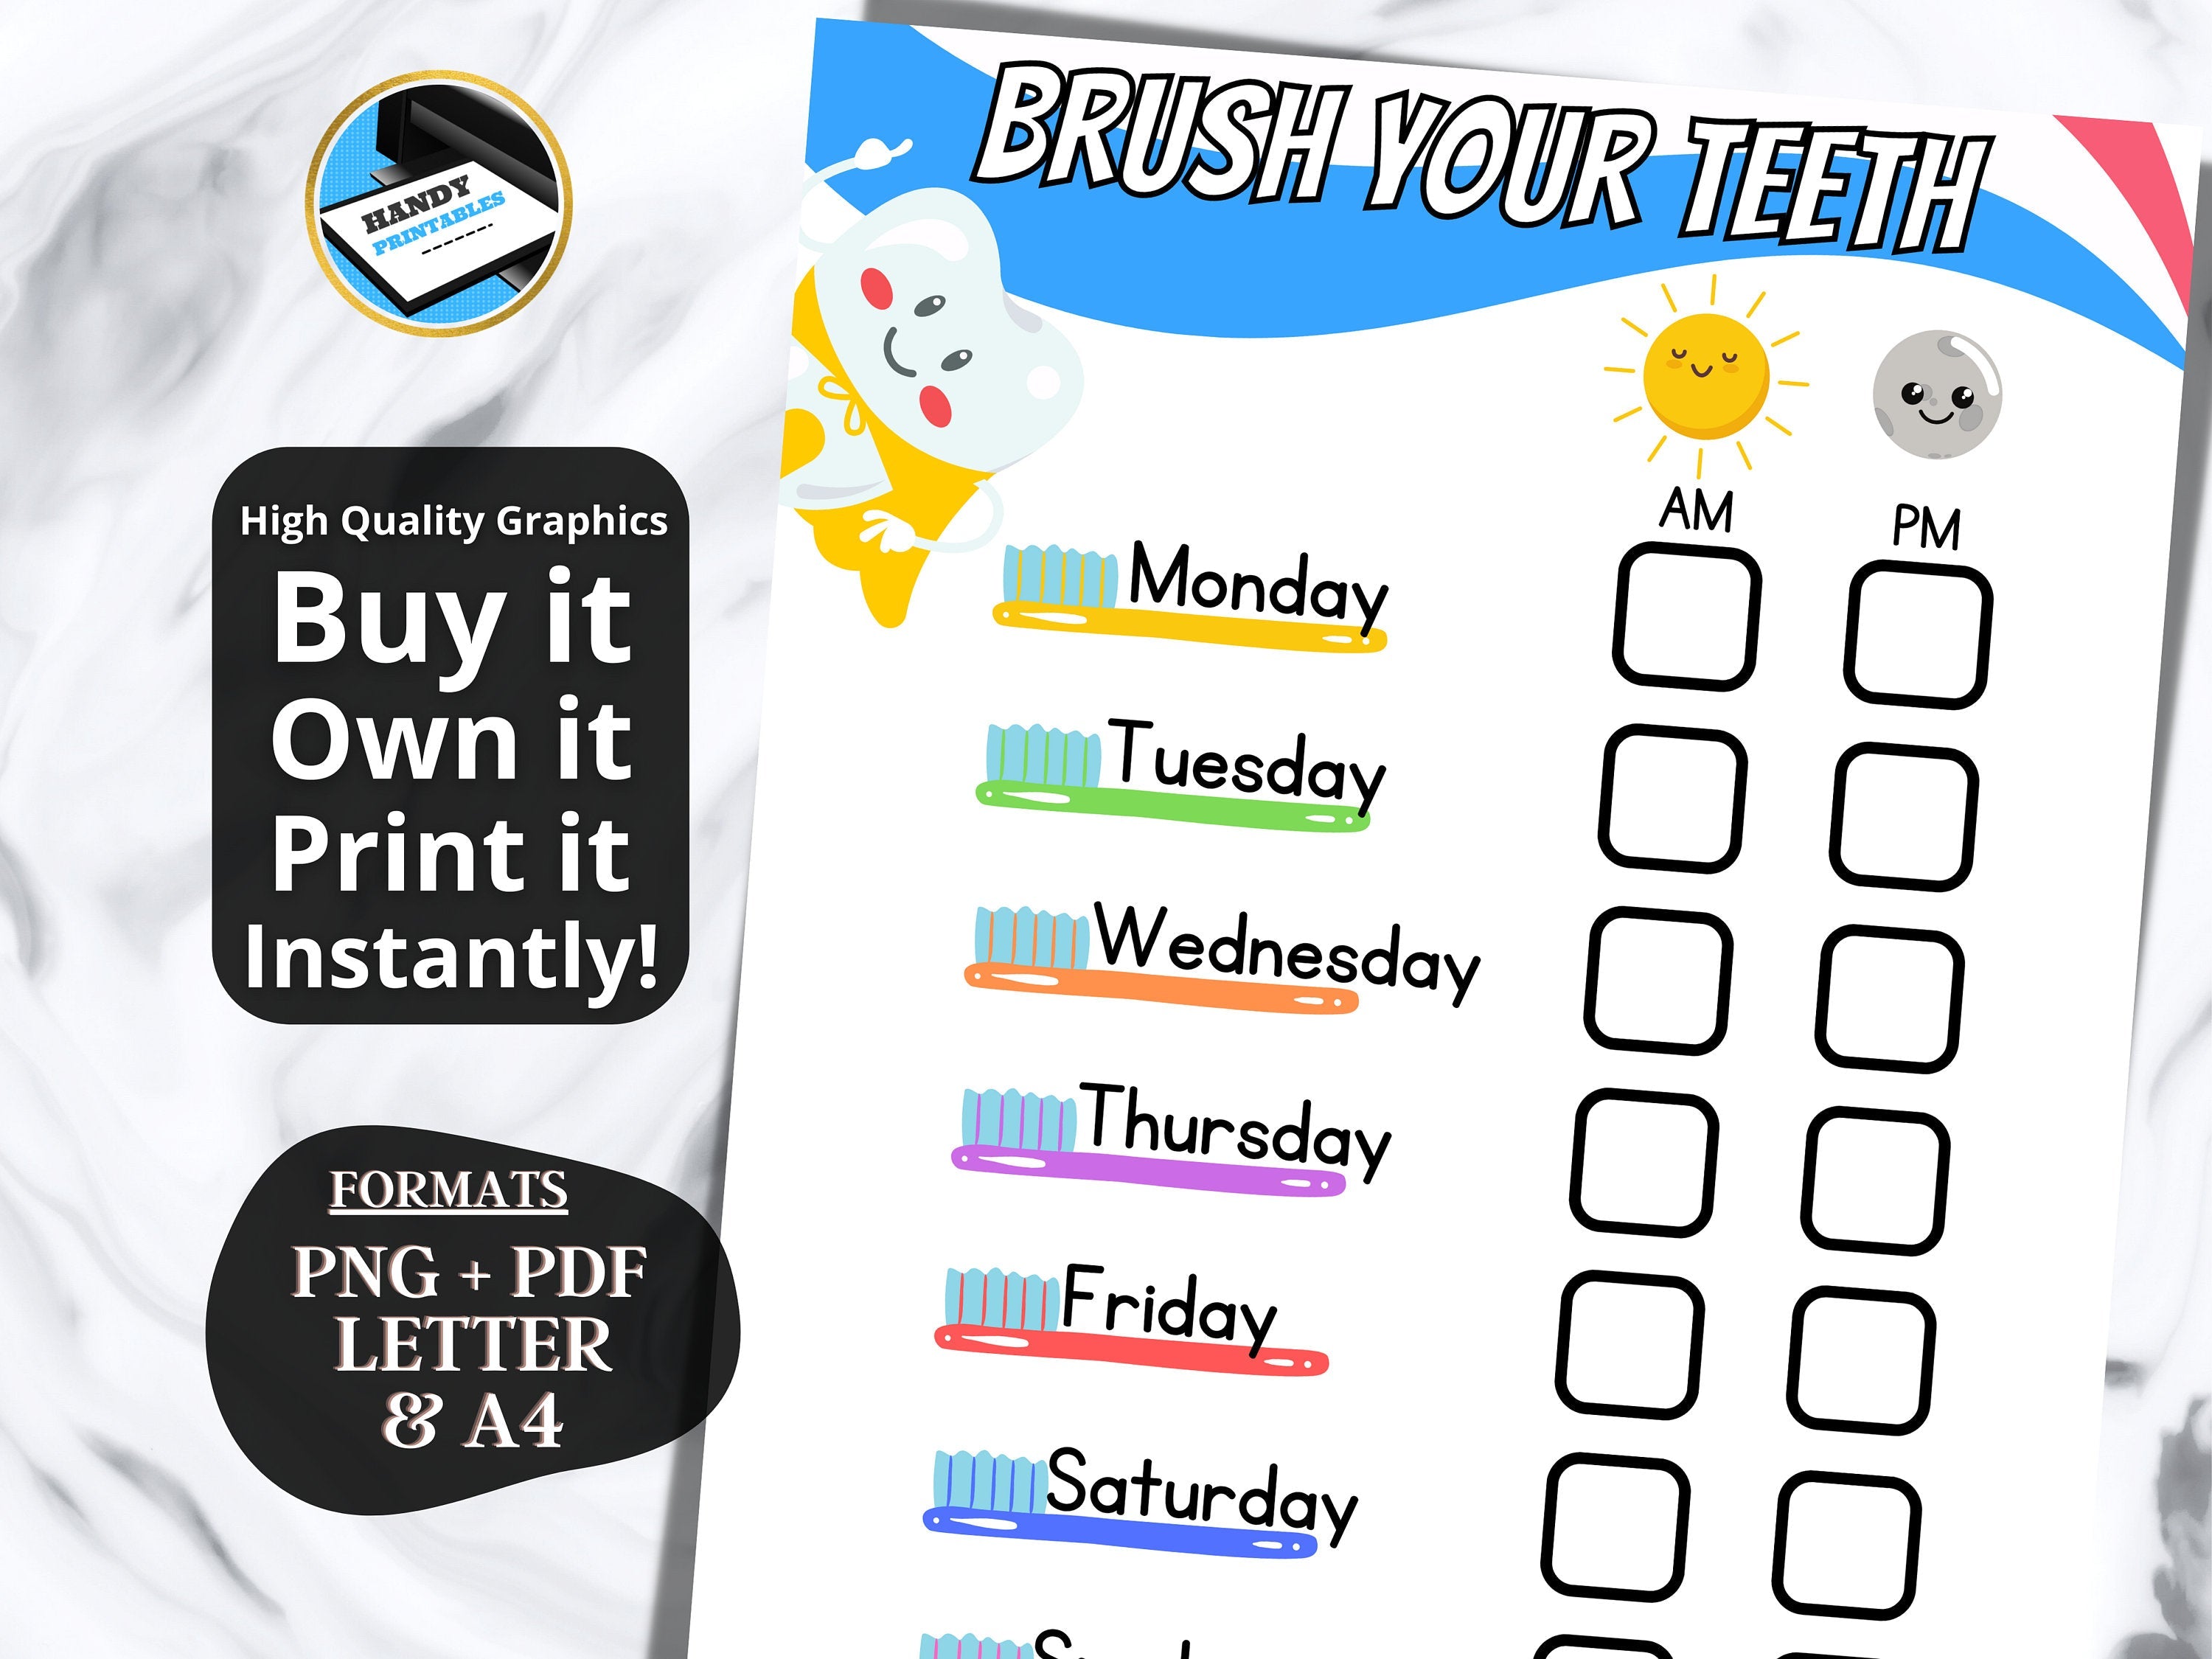 Brush Teeth Printable, Kids Brushing, Weekly Brushing Checklist, Brush Teeth Chart, Teeth Brushing Chart, Toddler, Tooth Brushing Schedule - HandyPrintables